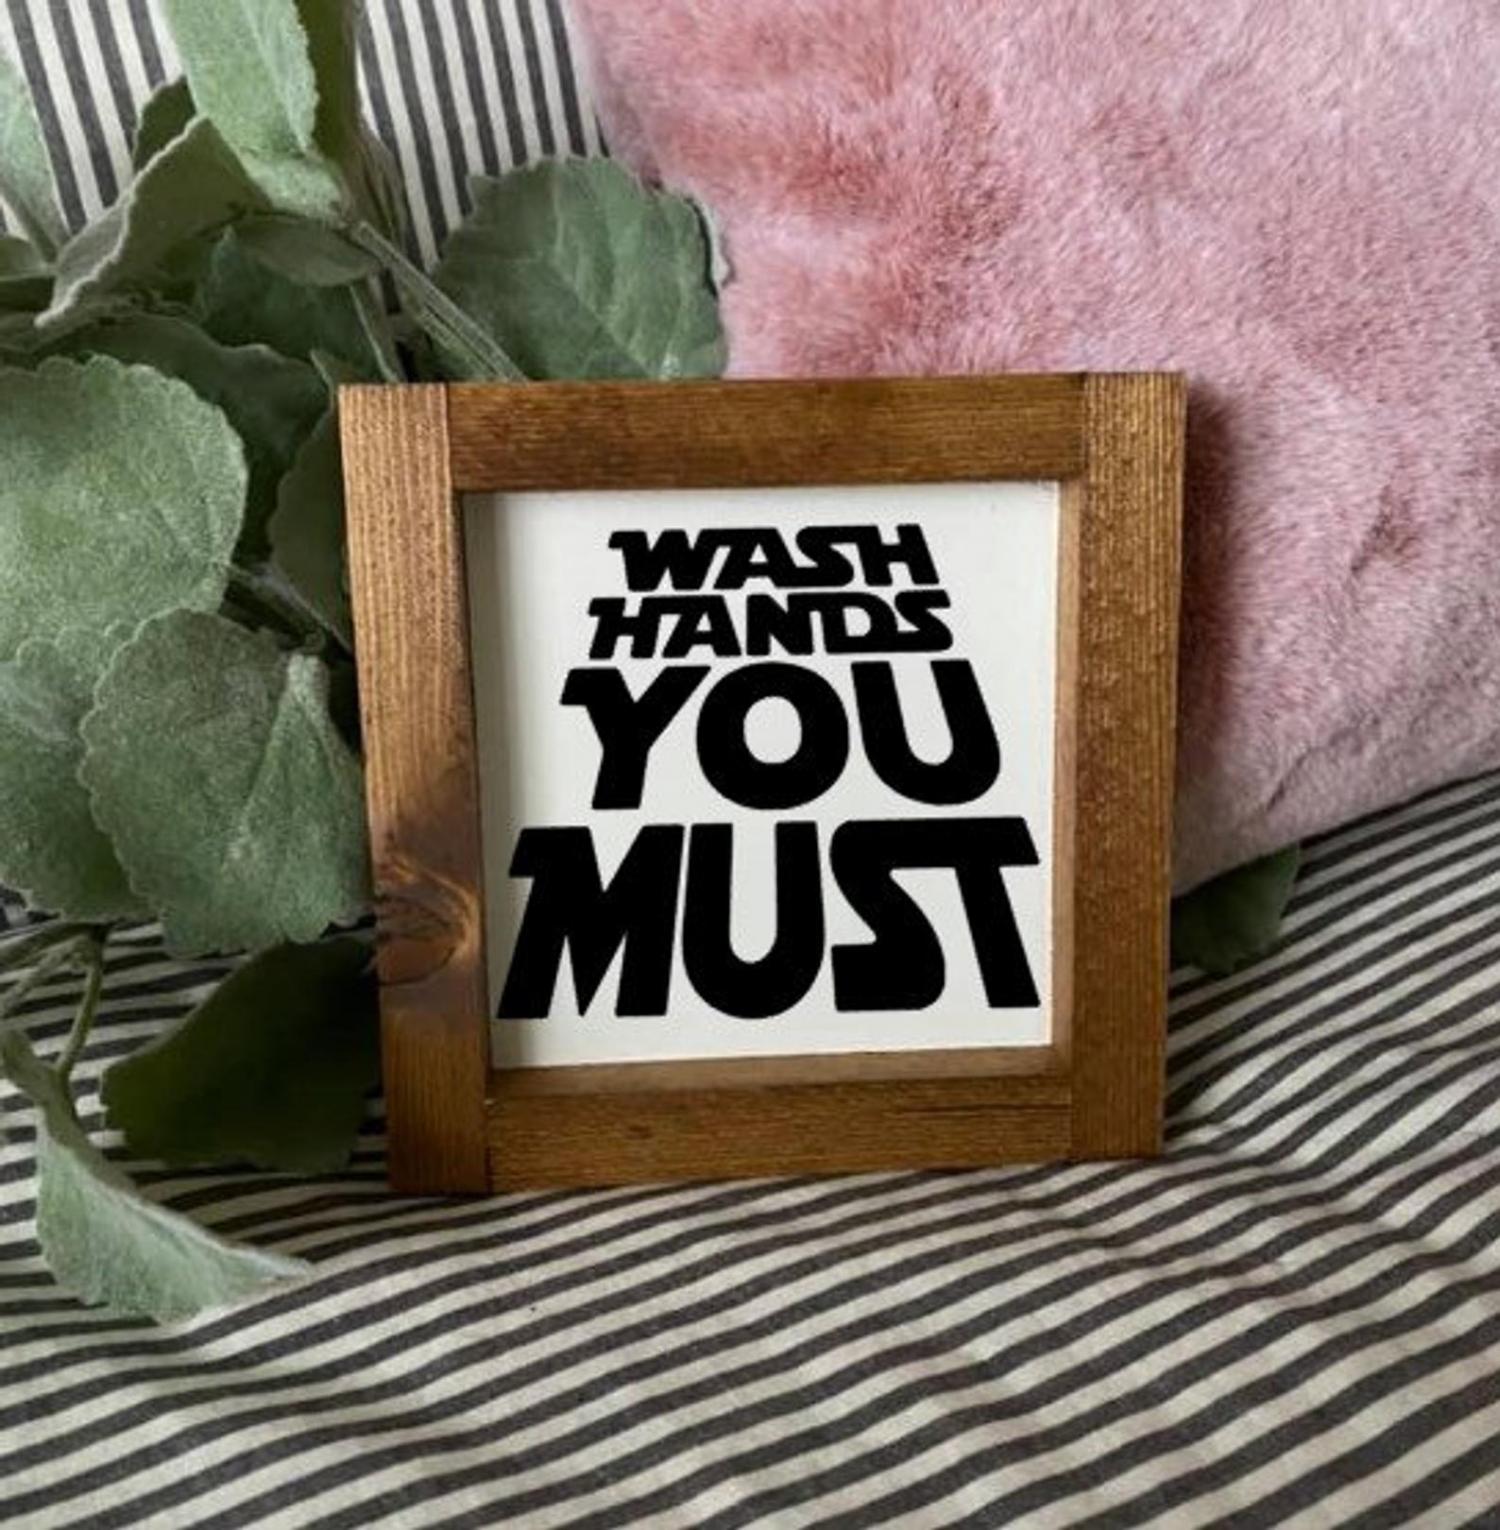 Wash Hands You Must Star Wars Toilet Bathroom Sign - Funny Star Wars Bathroom Sign